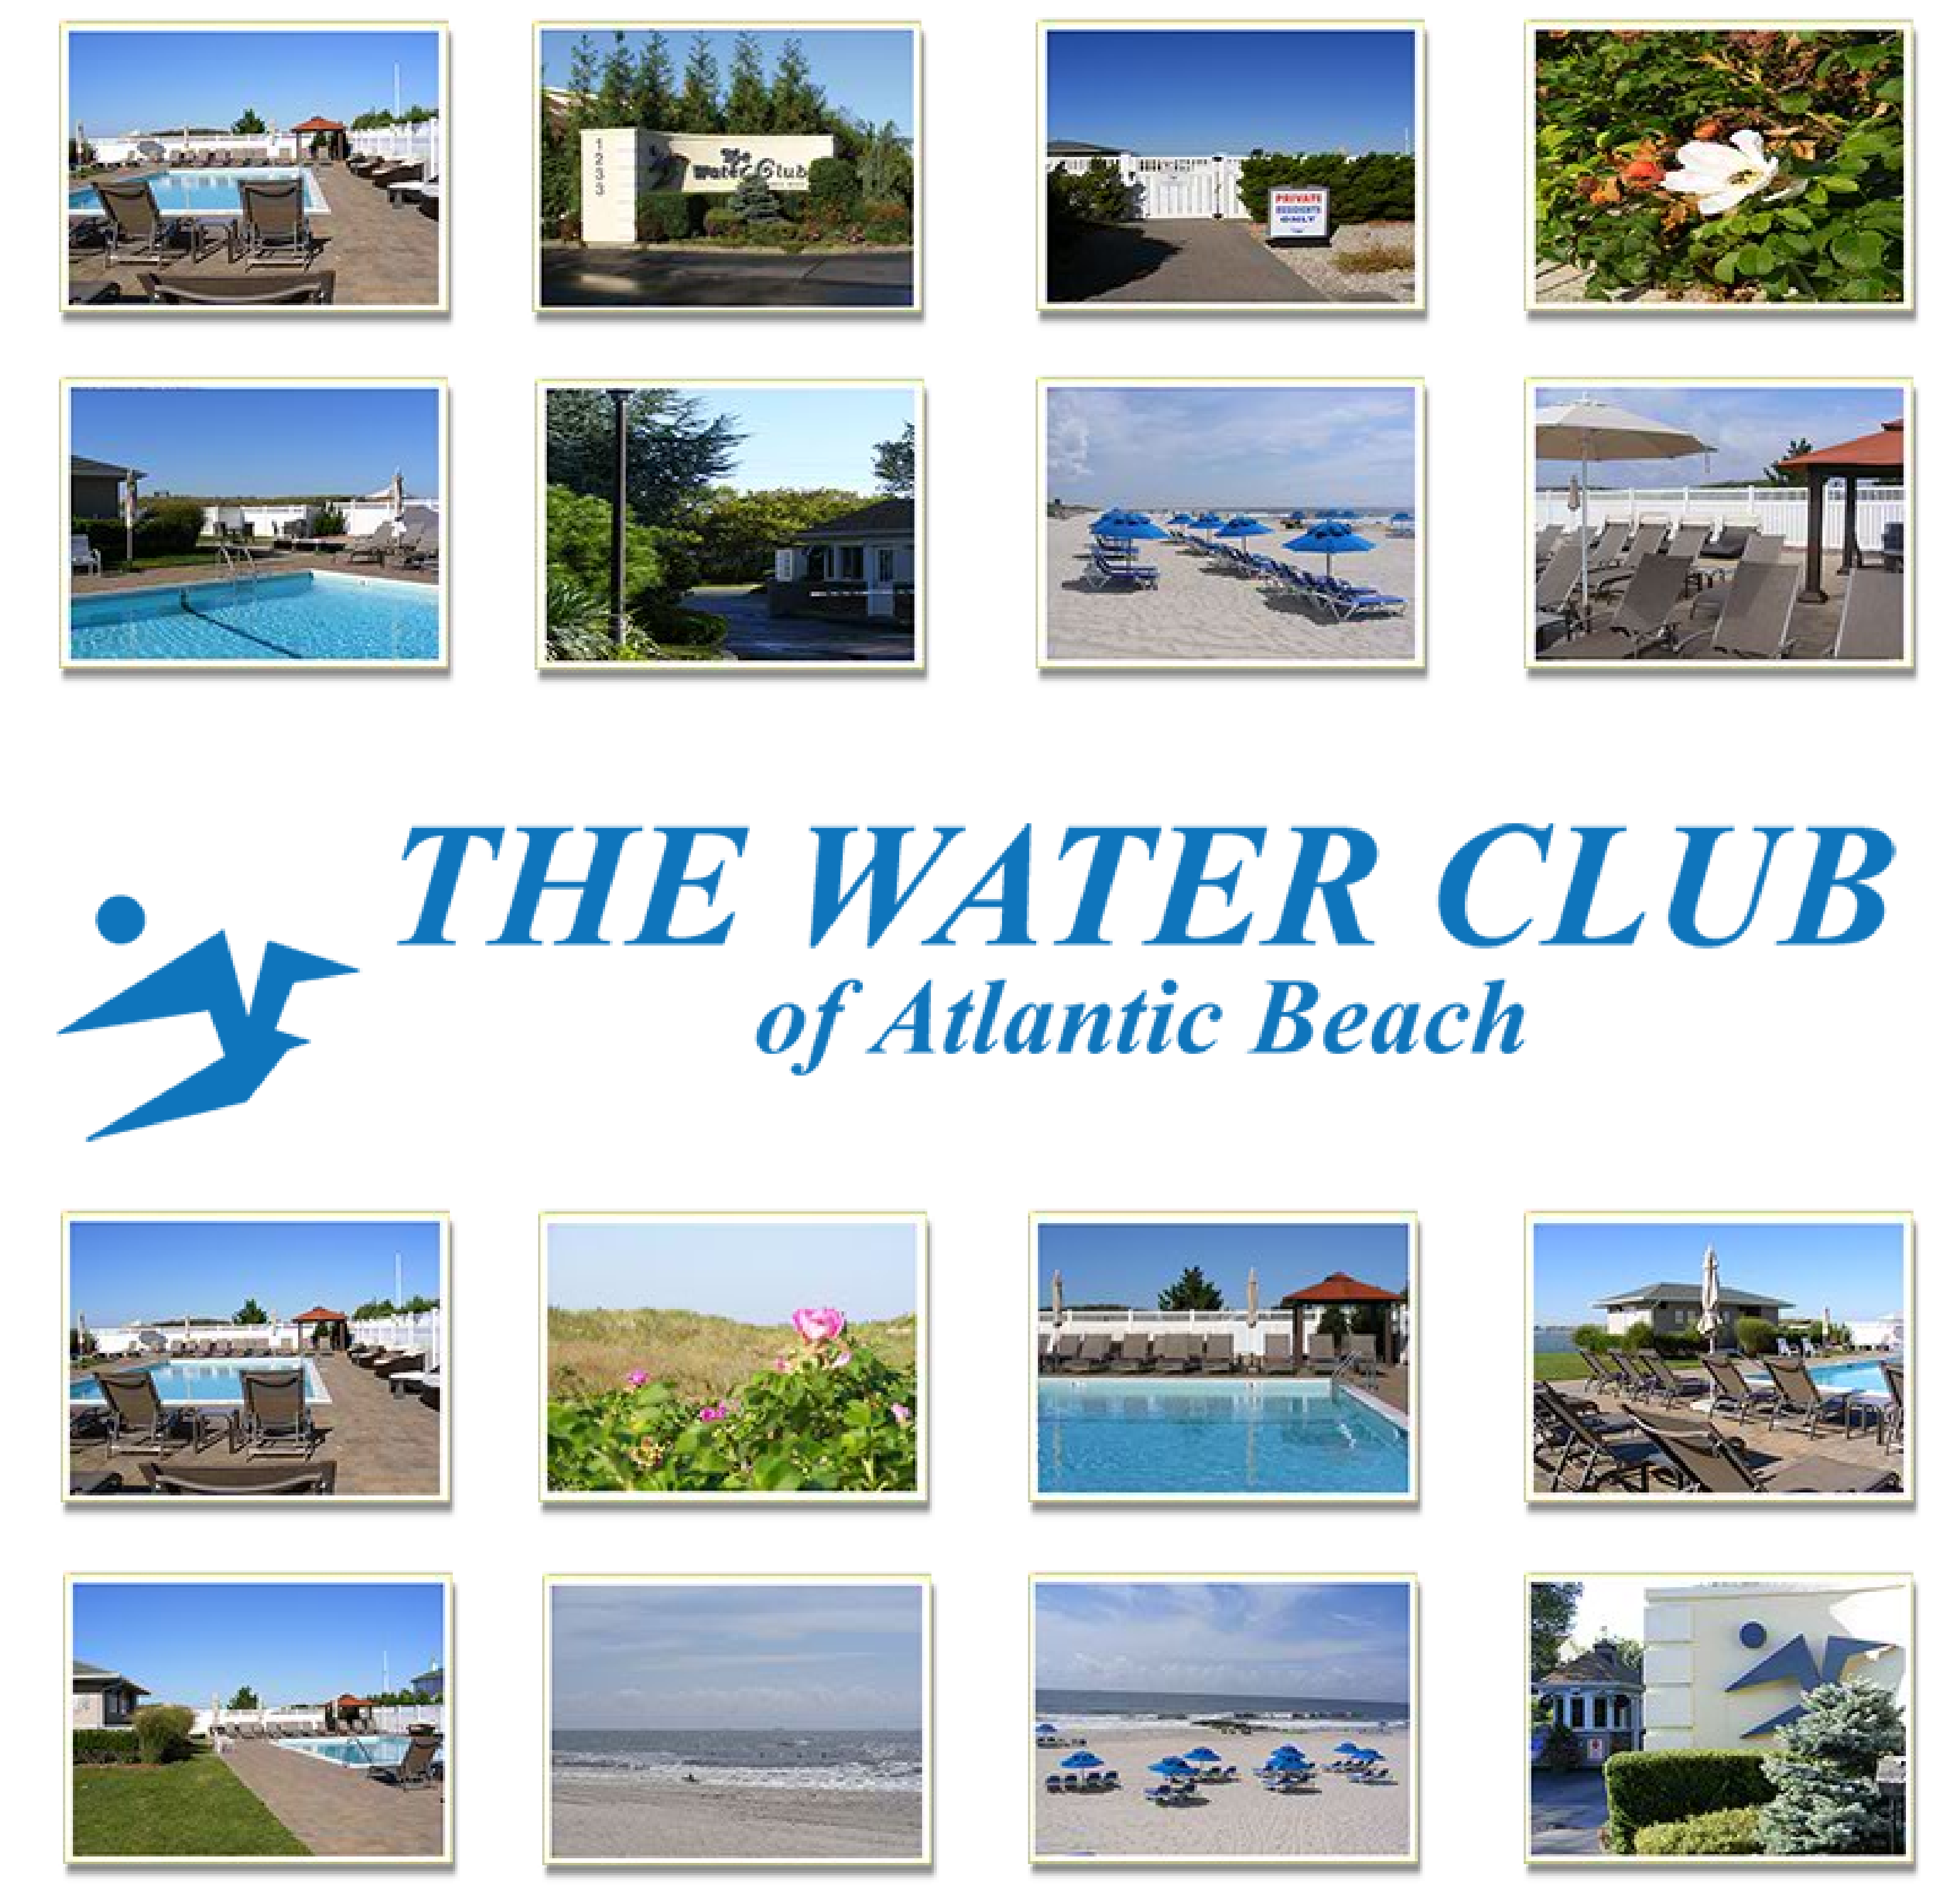 The Water Club of Atlantic Beach